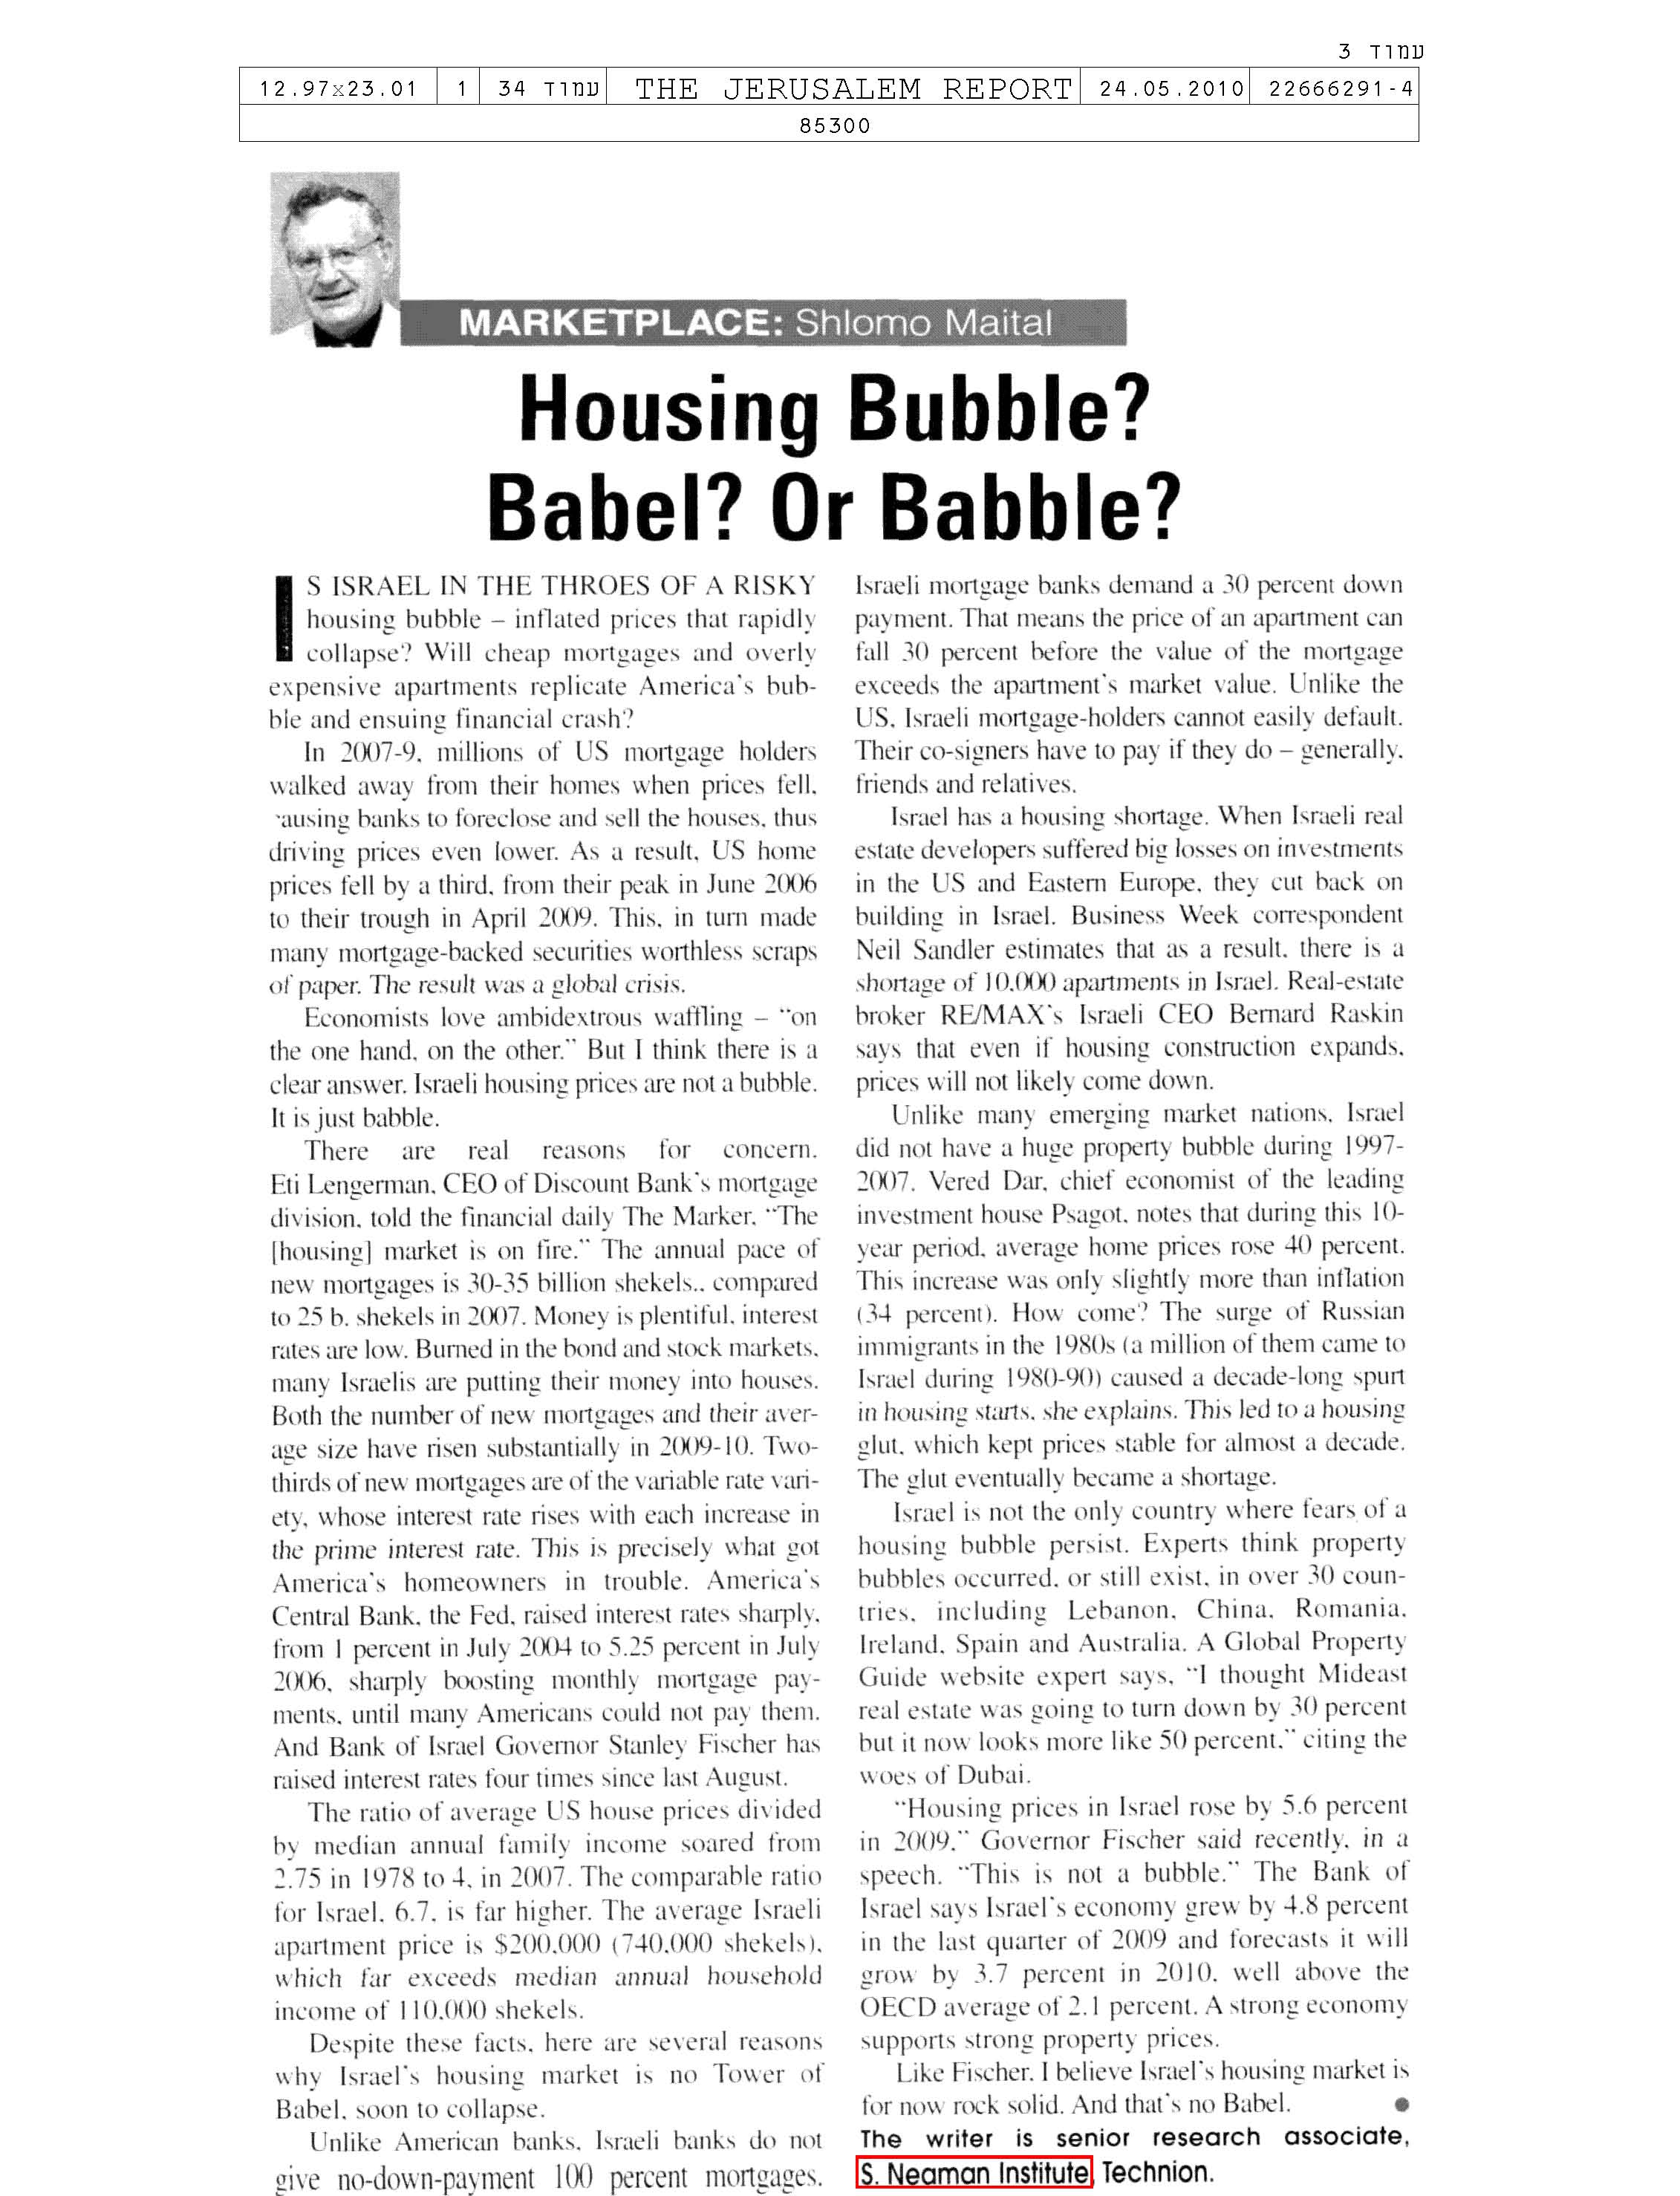 Housing Bubble? Babel? Or Babble?